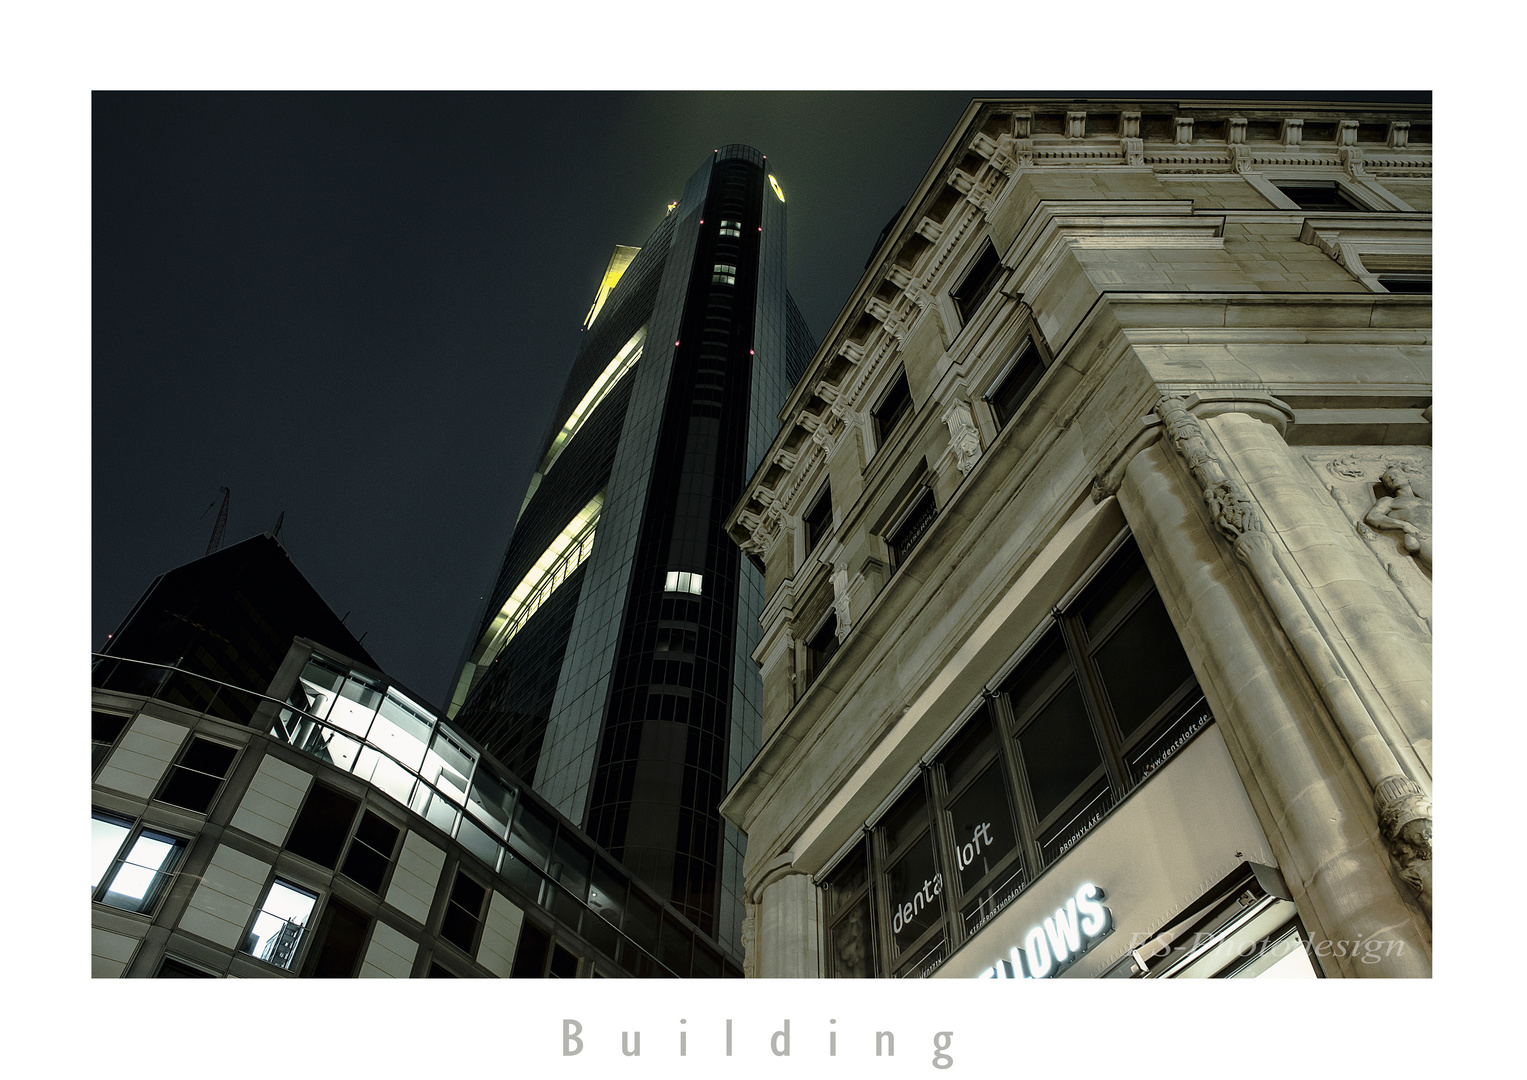 "Building"